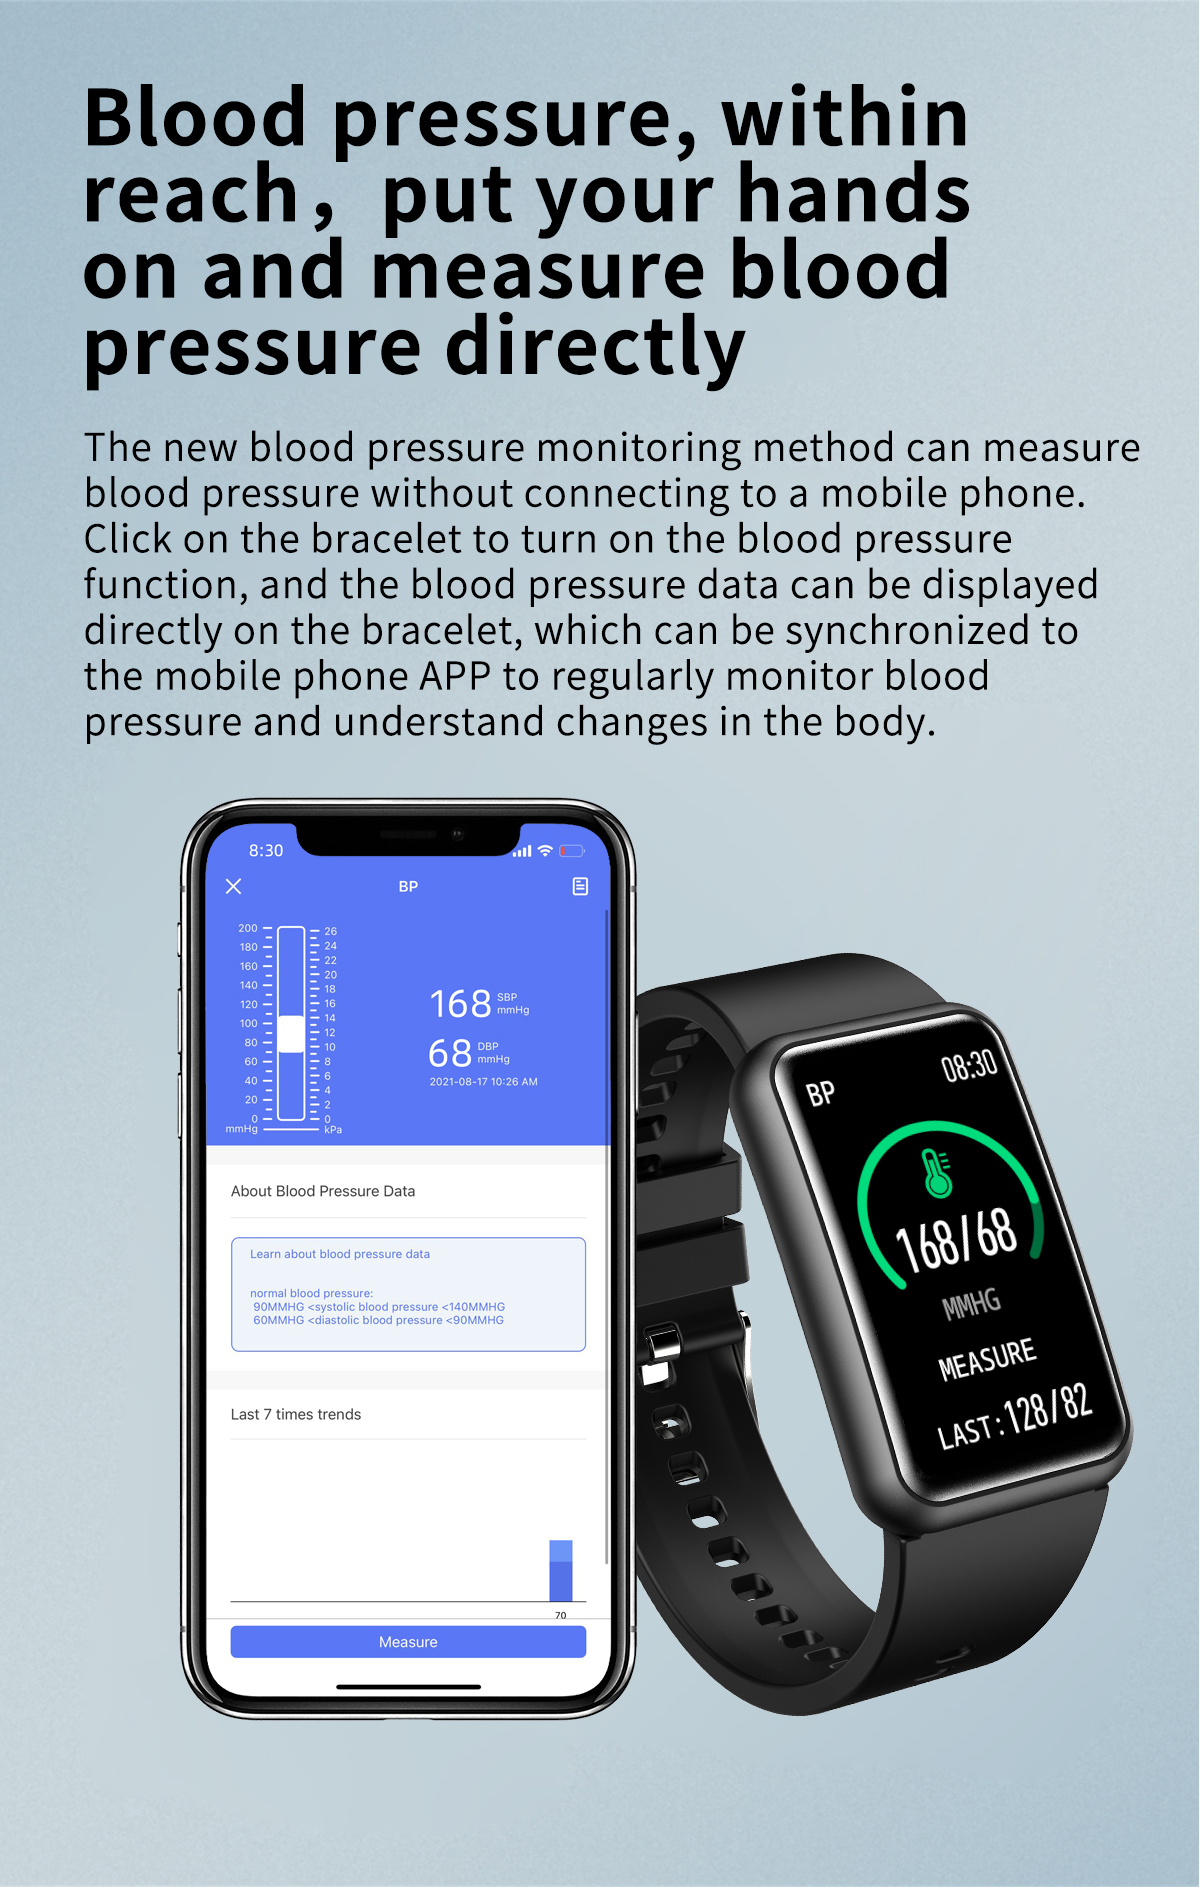 INF Aktivitätsarmband Smartwatch Silikon, silber